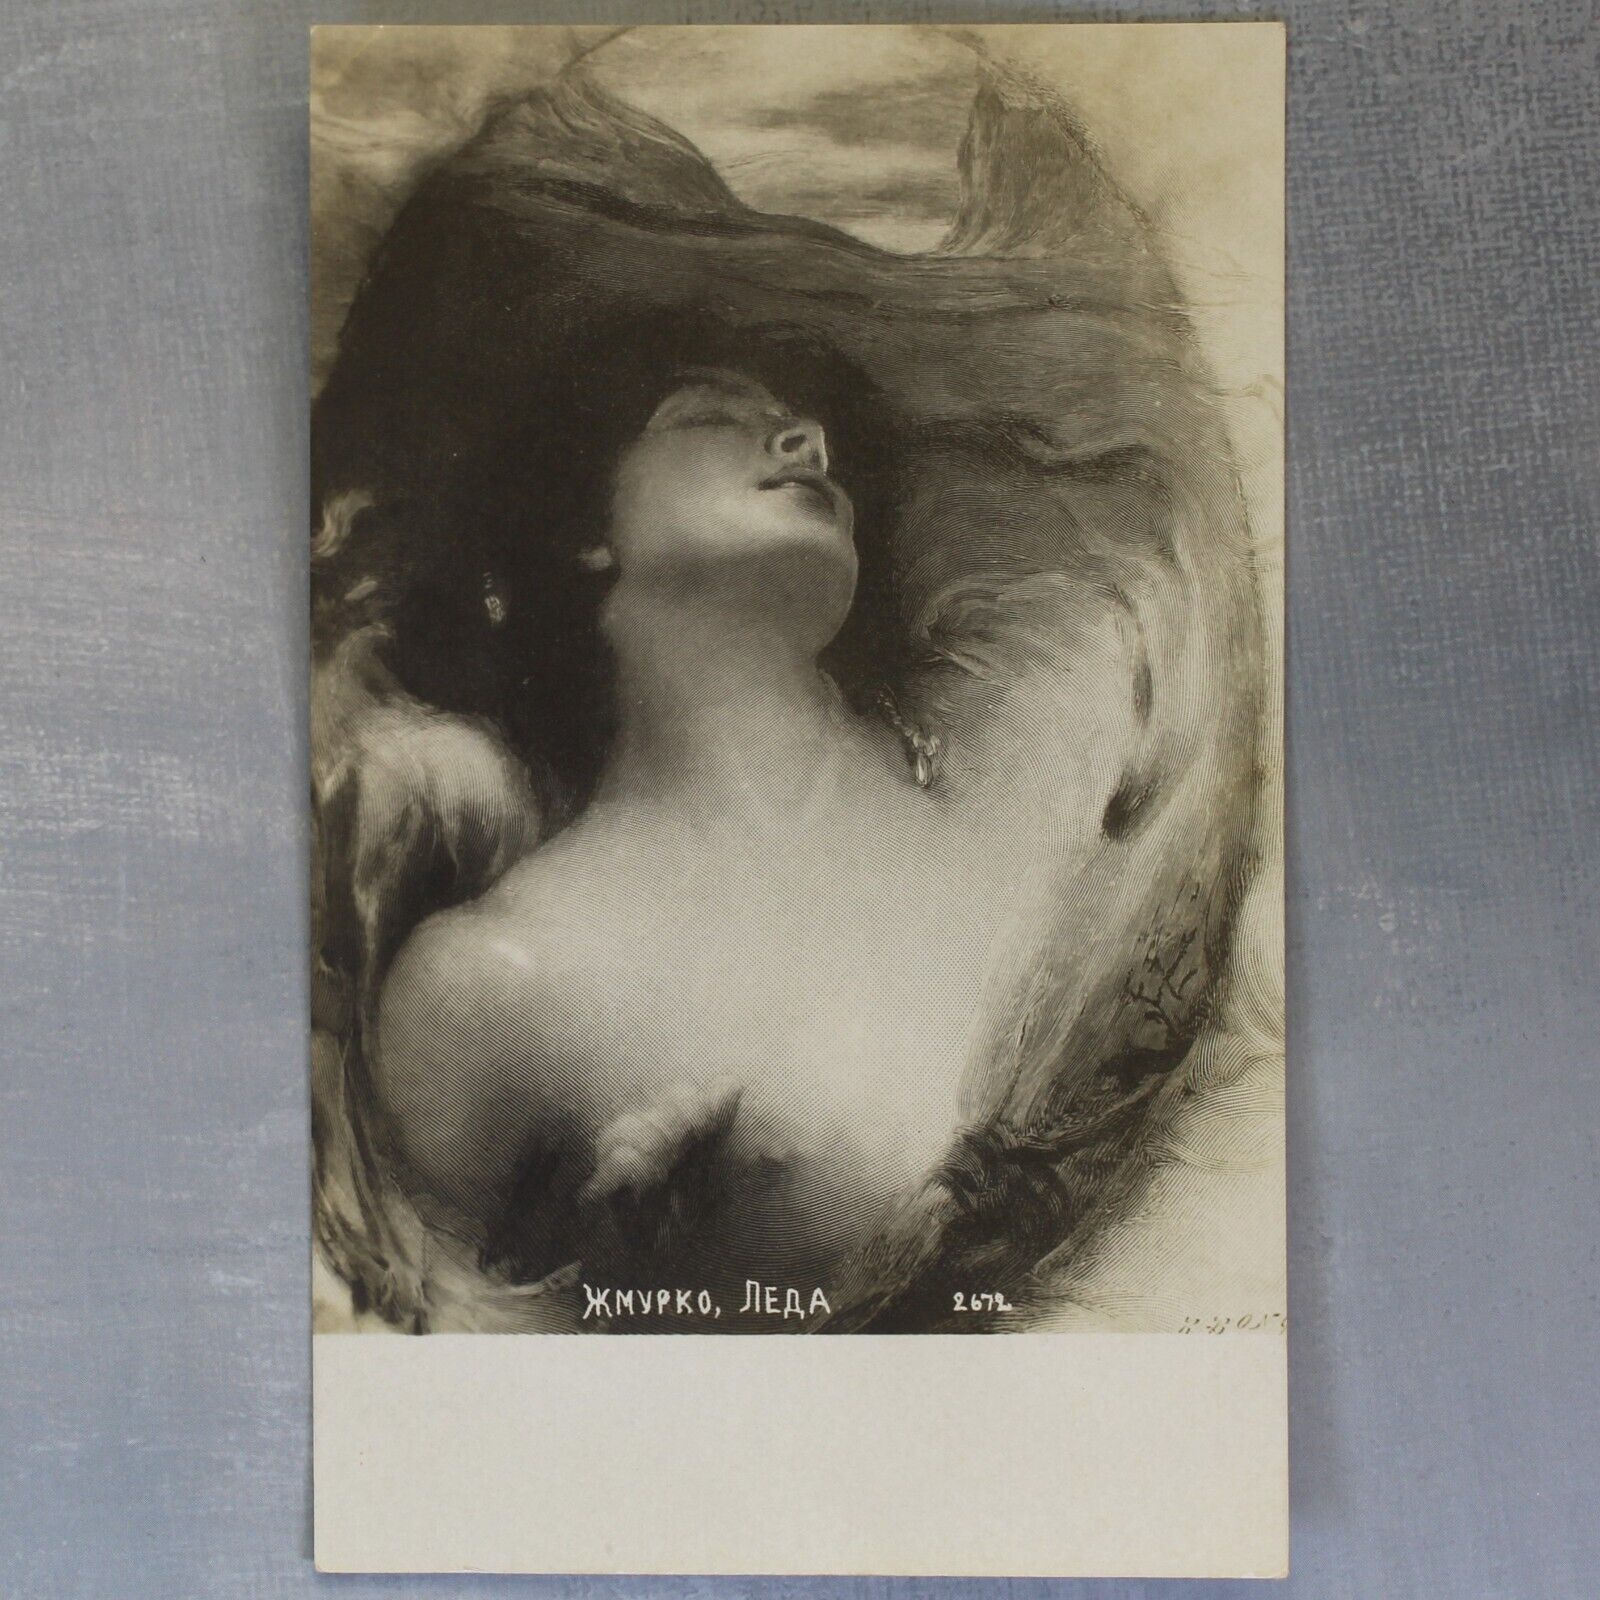 Ecstasy. Nude woman Beautiful Leda. Tsarist Russia postcard 1909s by Zmurko🌷